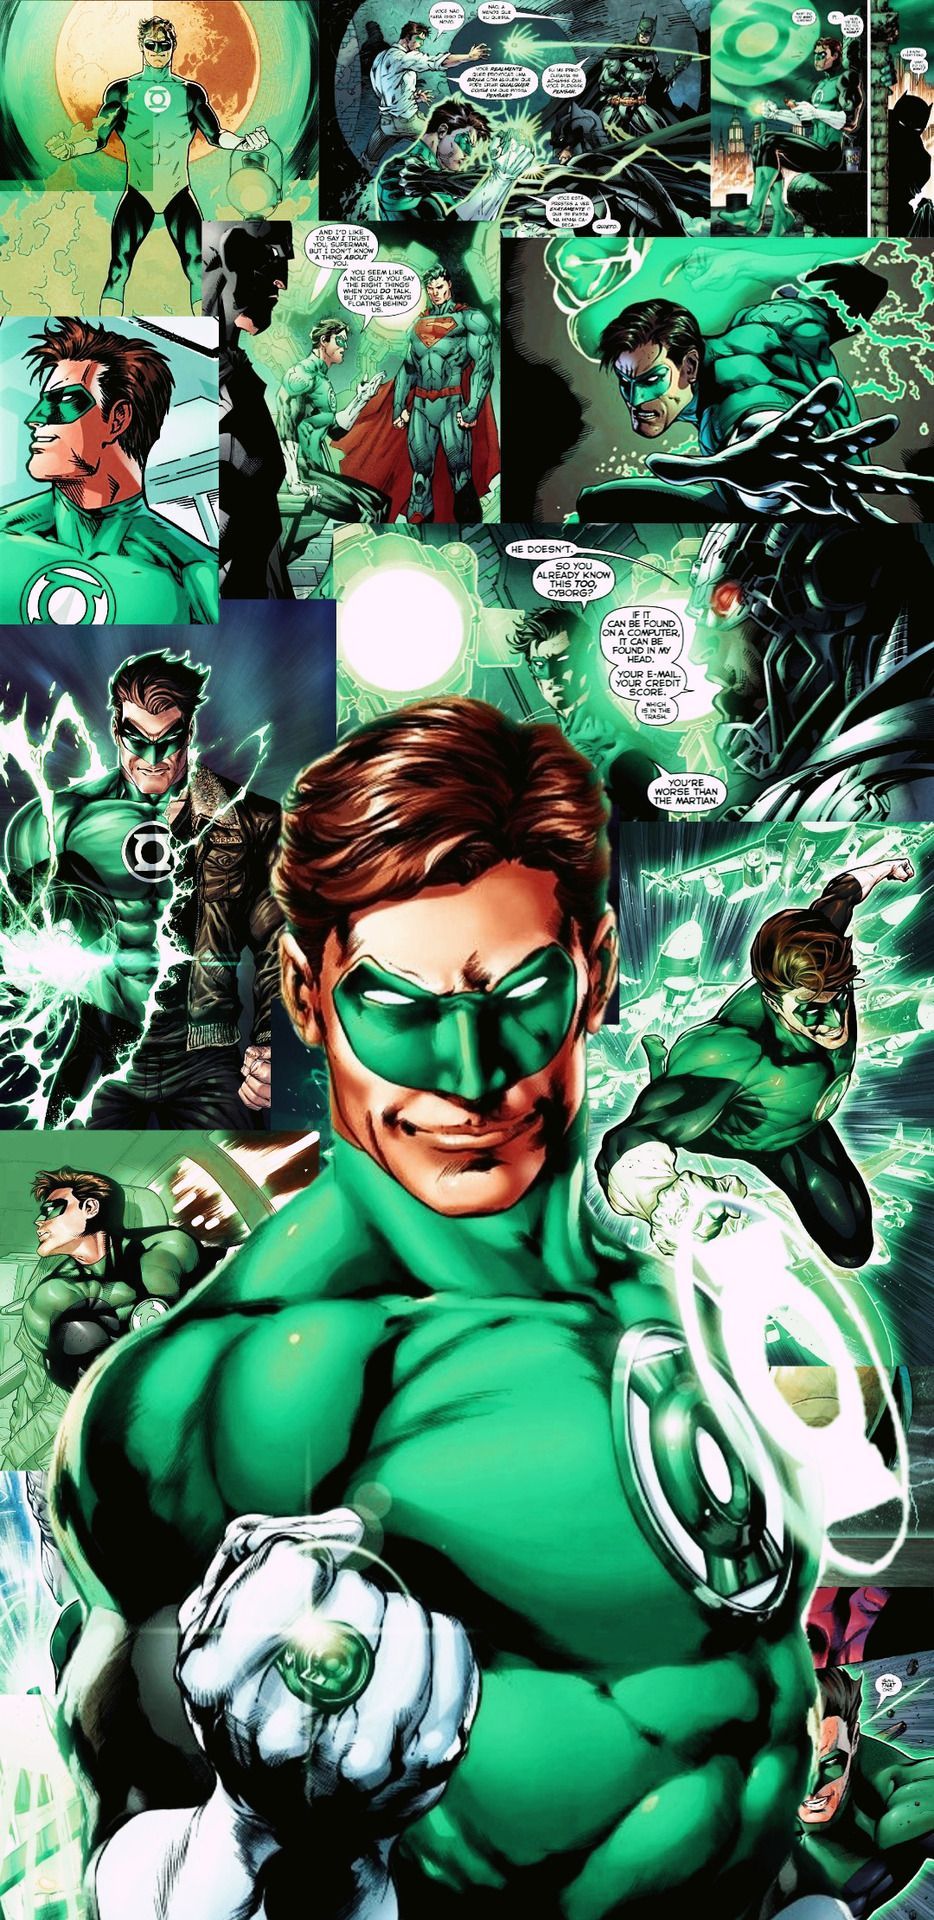 Green Lantern Corps Phone Wallpaper: Hal Jordan. Green lantern comics, Green lantern wallpaper, Green lantern corps